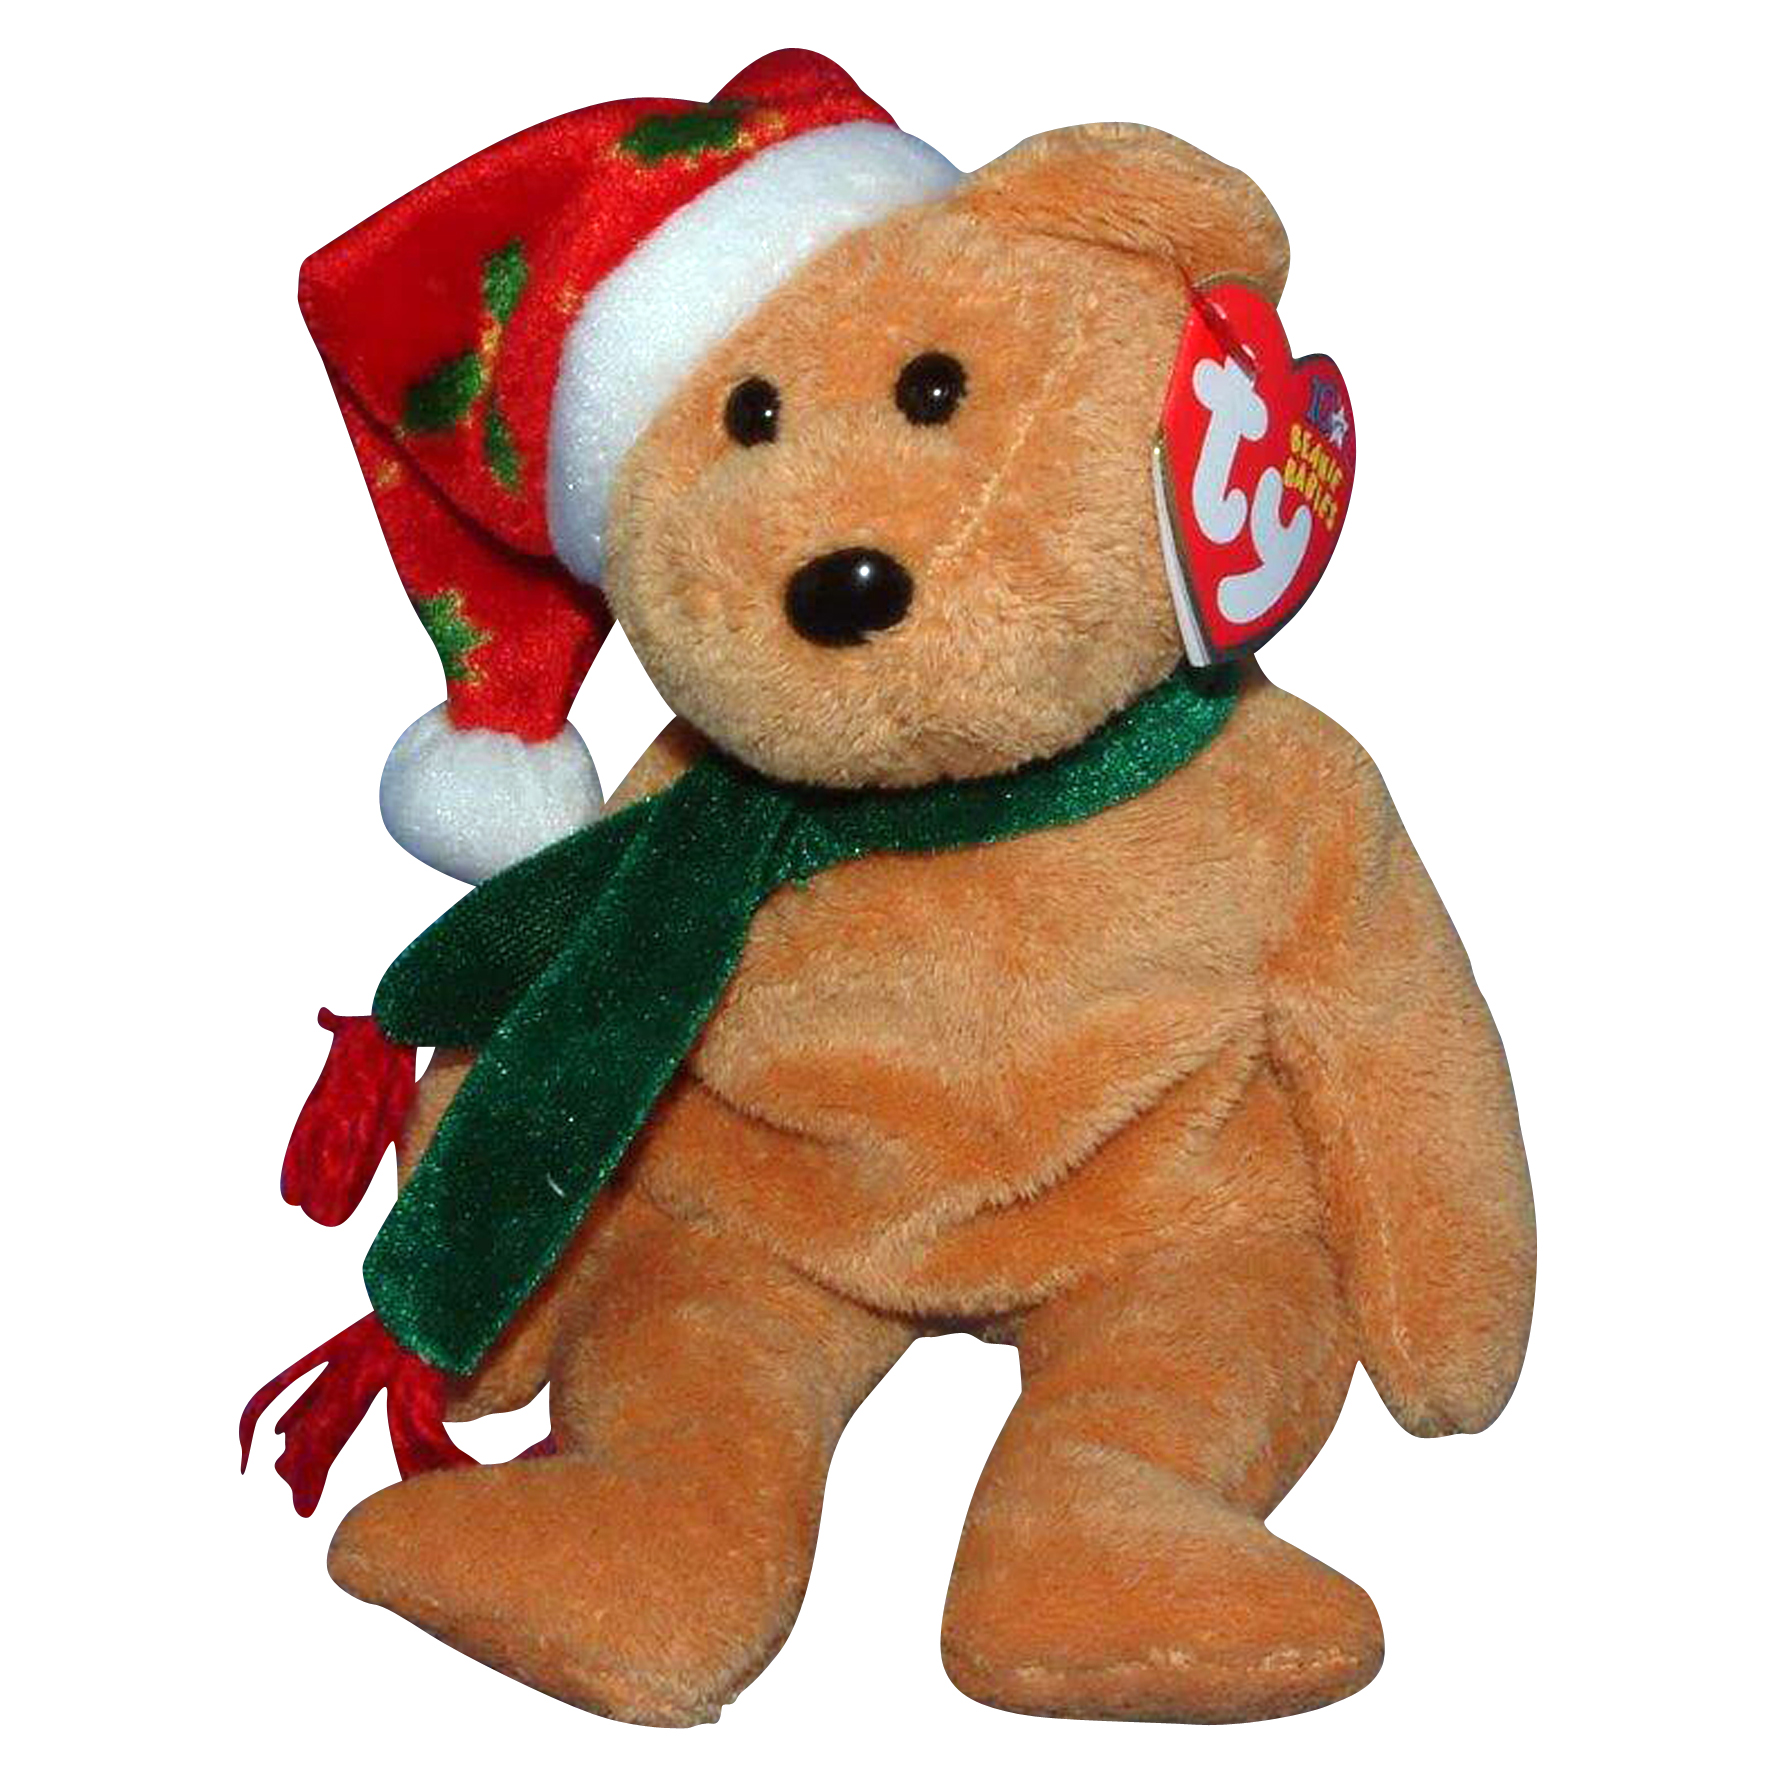 2003 holiday teddy beanie baby value